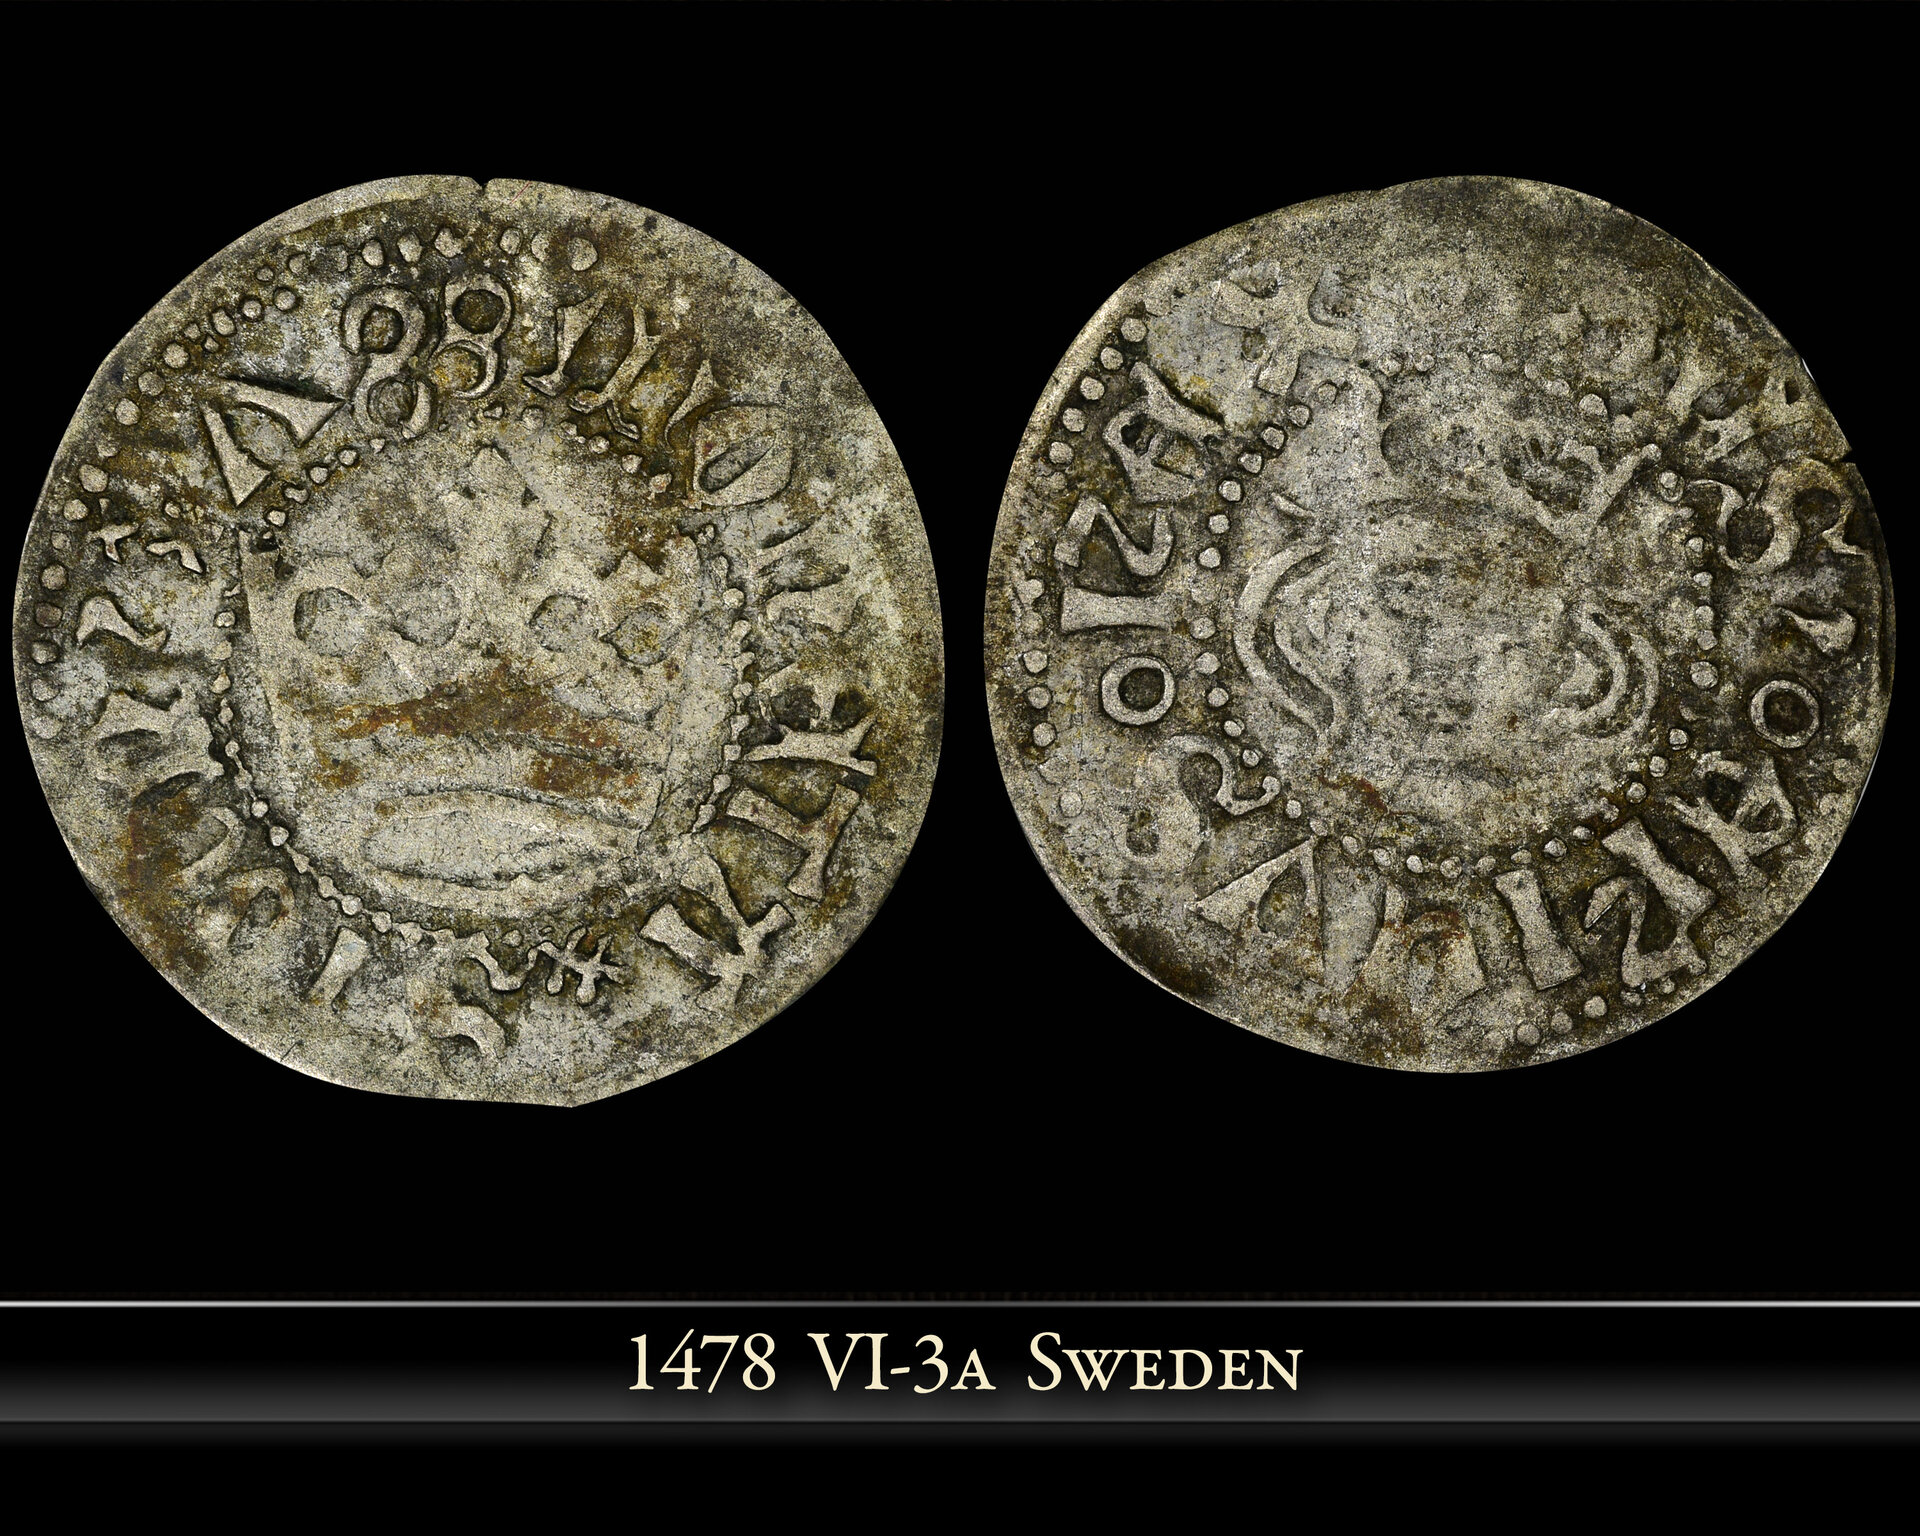 1478-Sweden-VI-3a - Copy.jpg